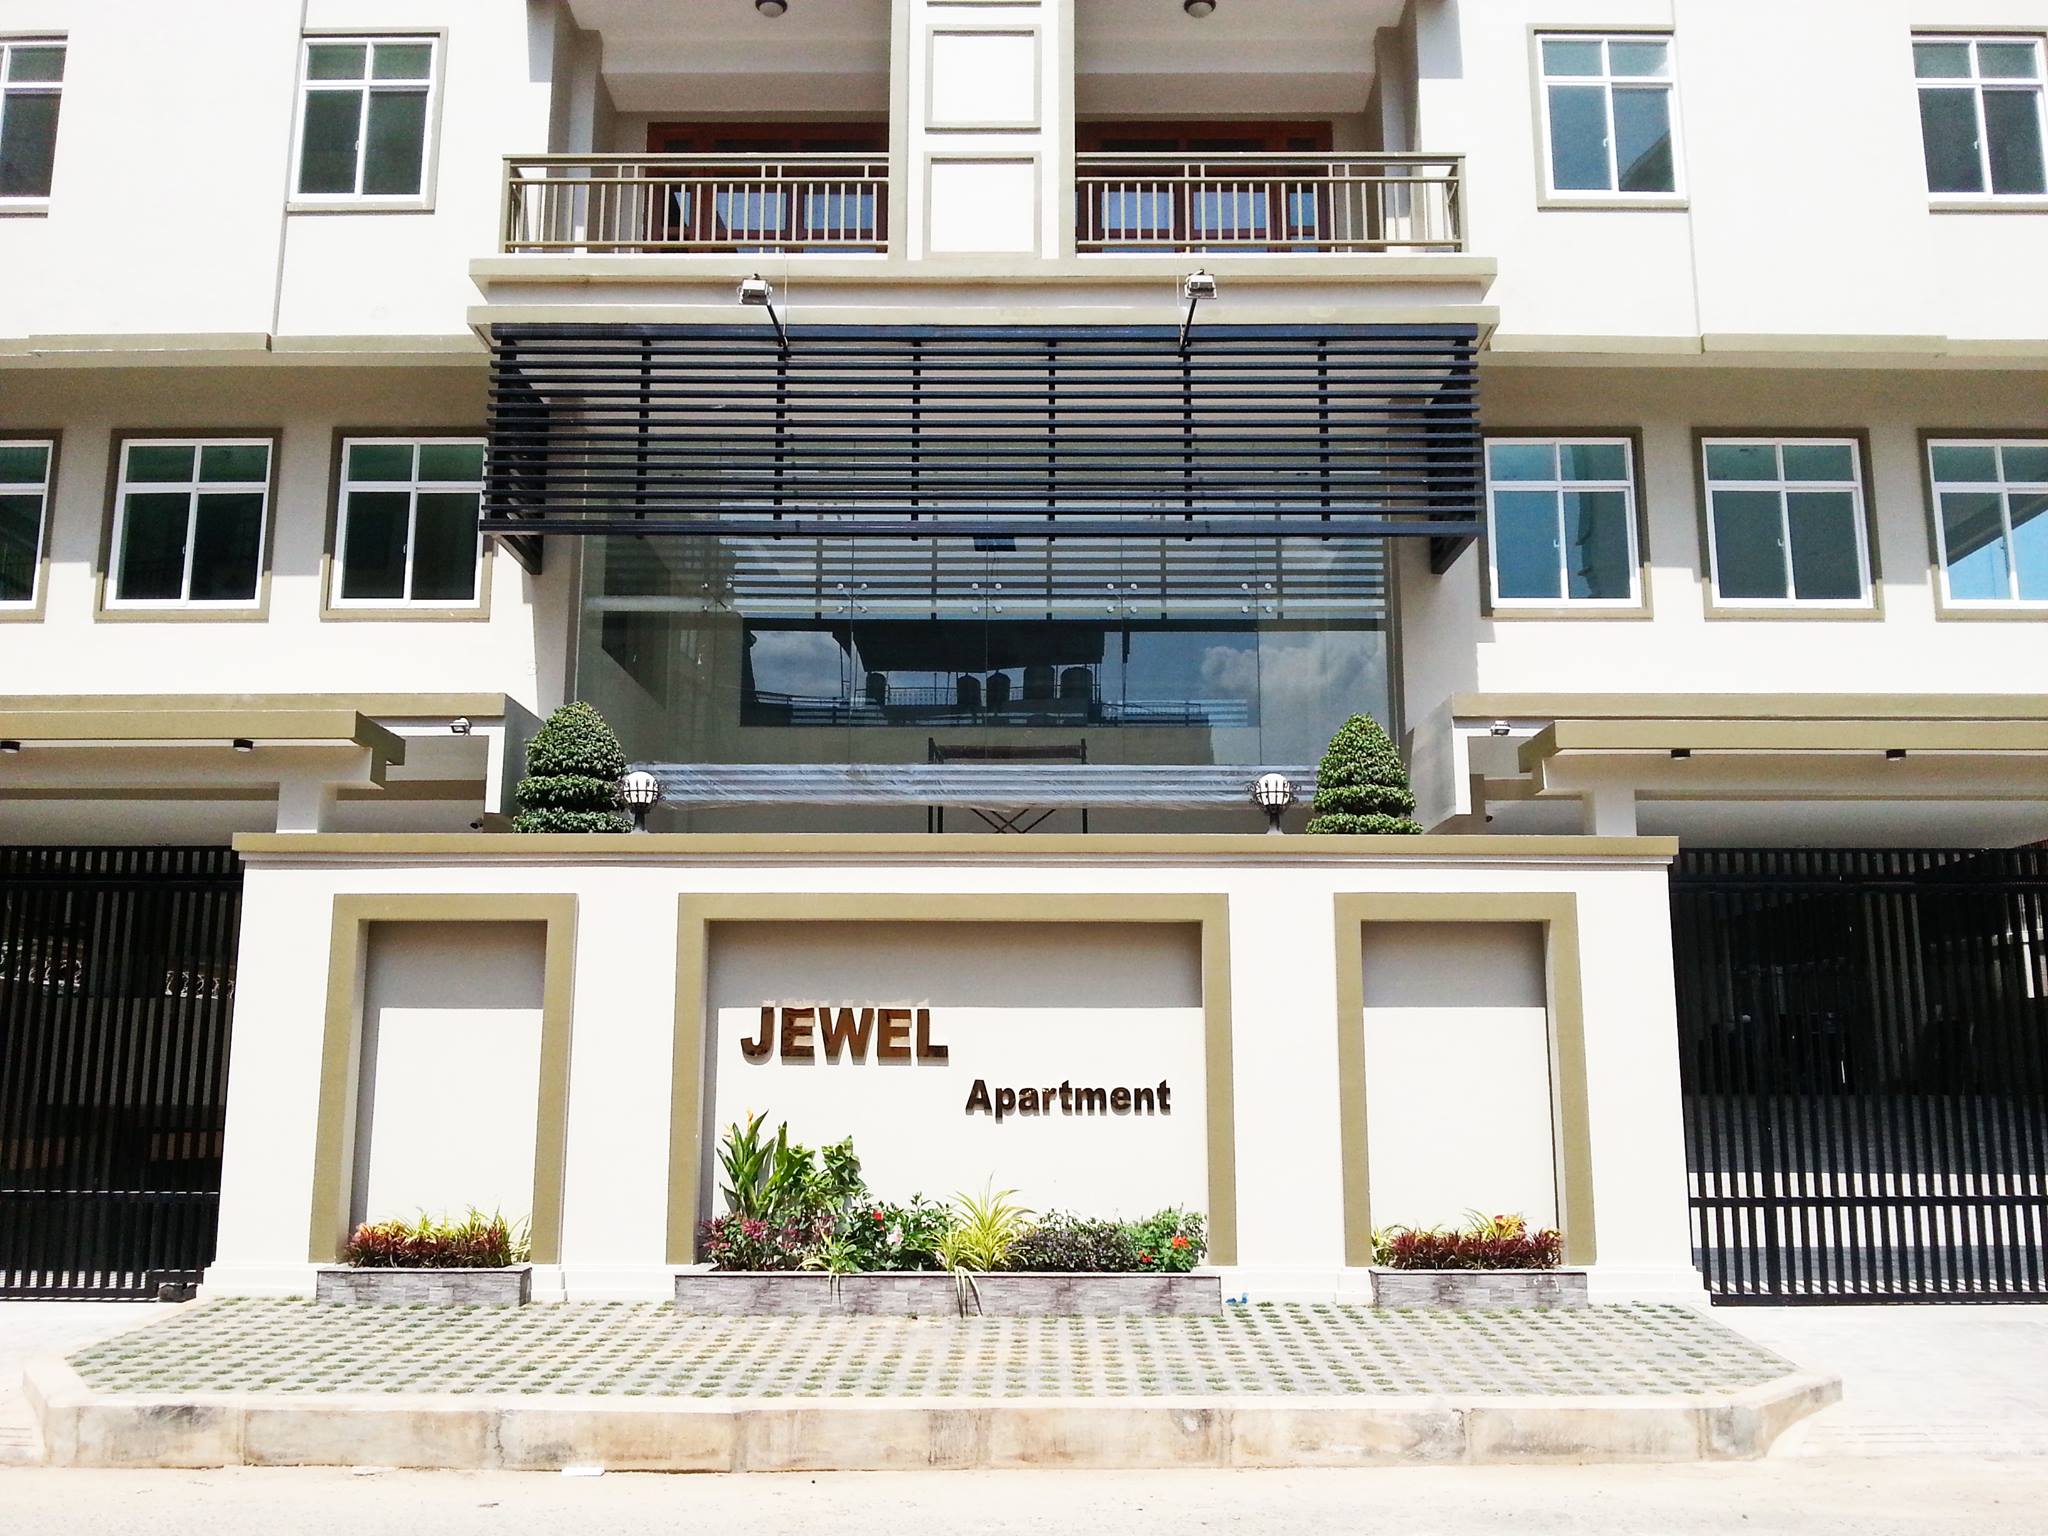 Jewel Apartment